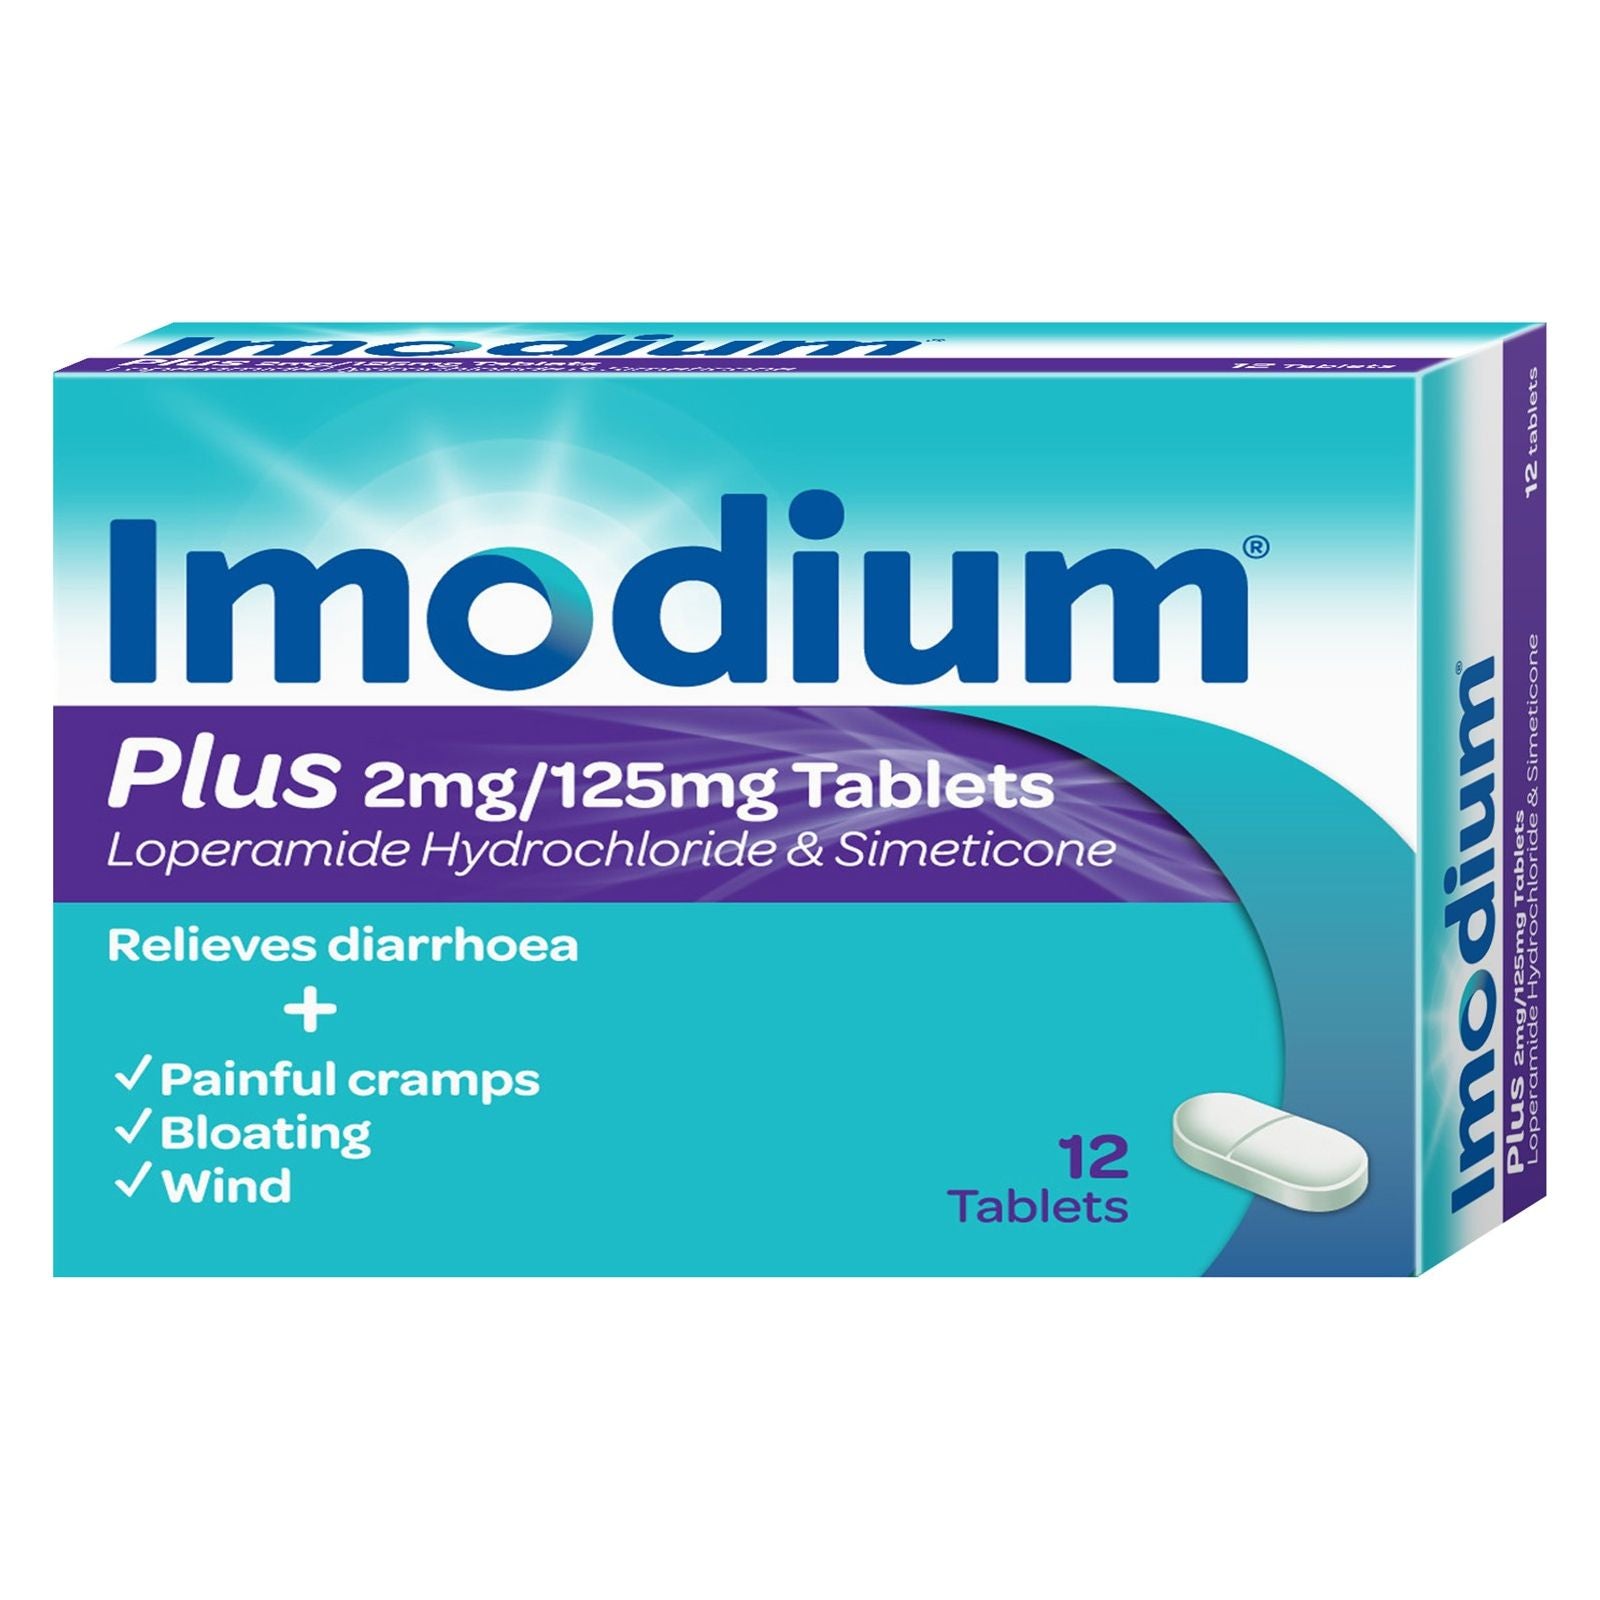 Imodium Plus Tablets 12